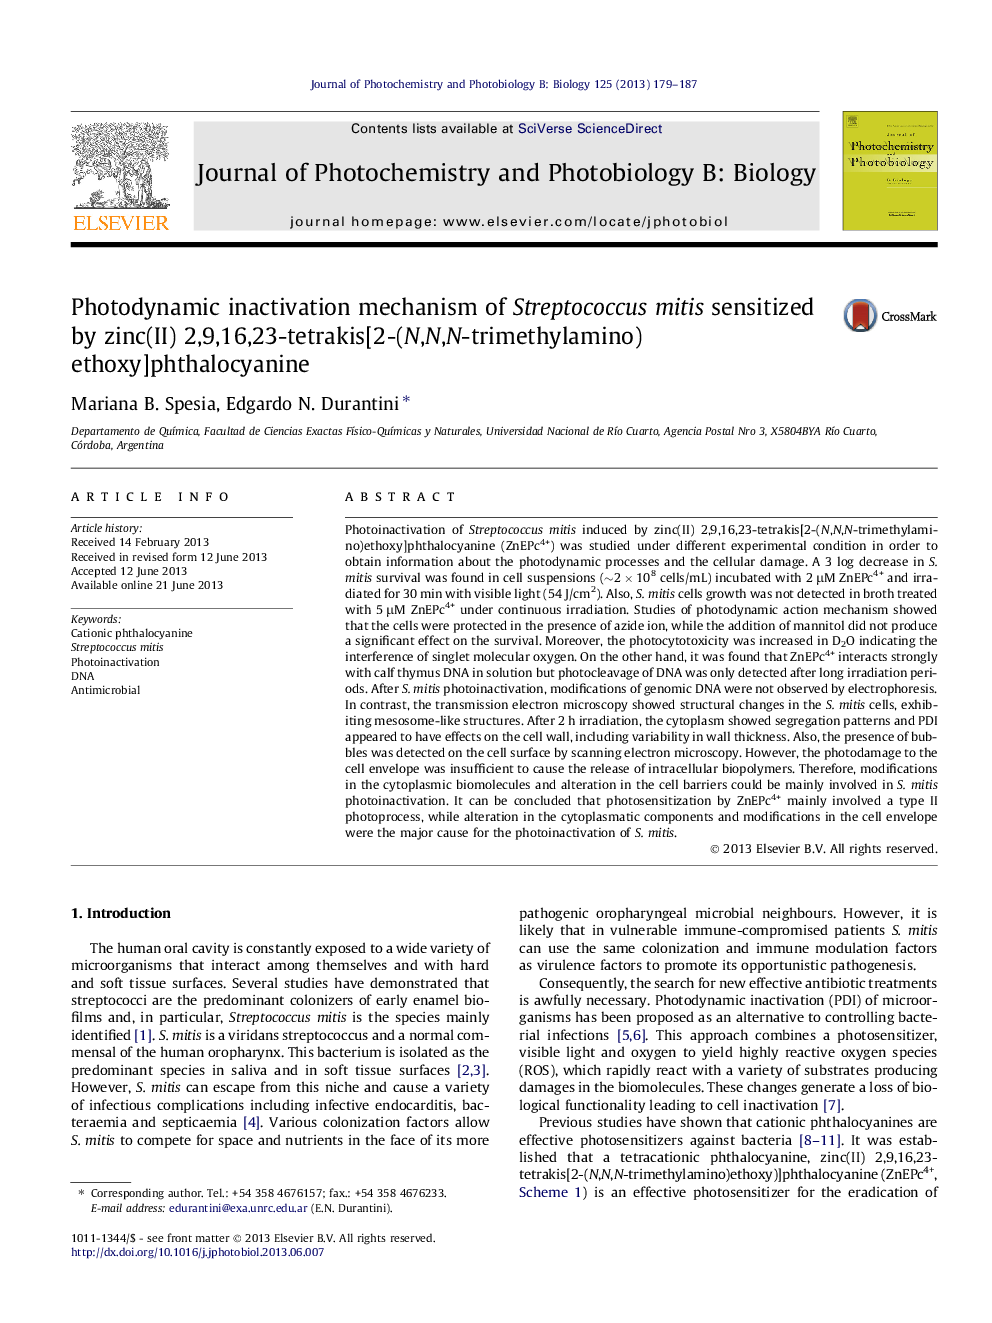 Photodynamic inactivation mechanism of Streptococcus mitis sensitized by zinc(II) 2,9,16,23-tetrakis[2-(N,N,N-trimethylamino)ethoxy]phthalocyanine